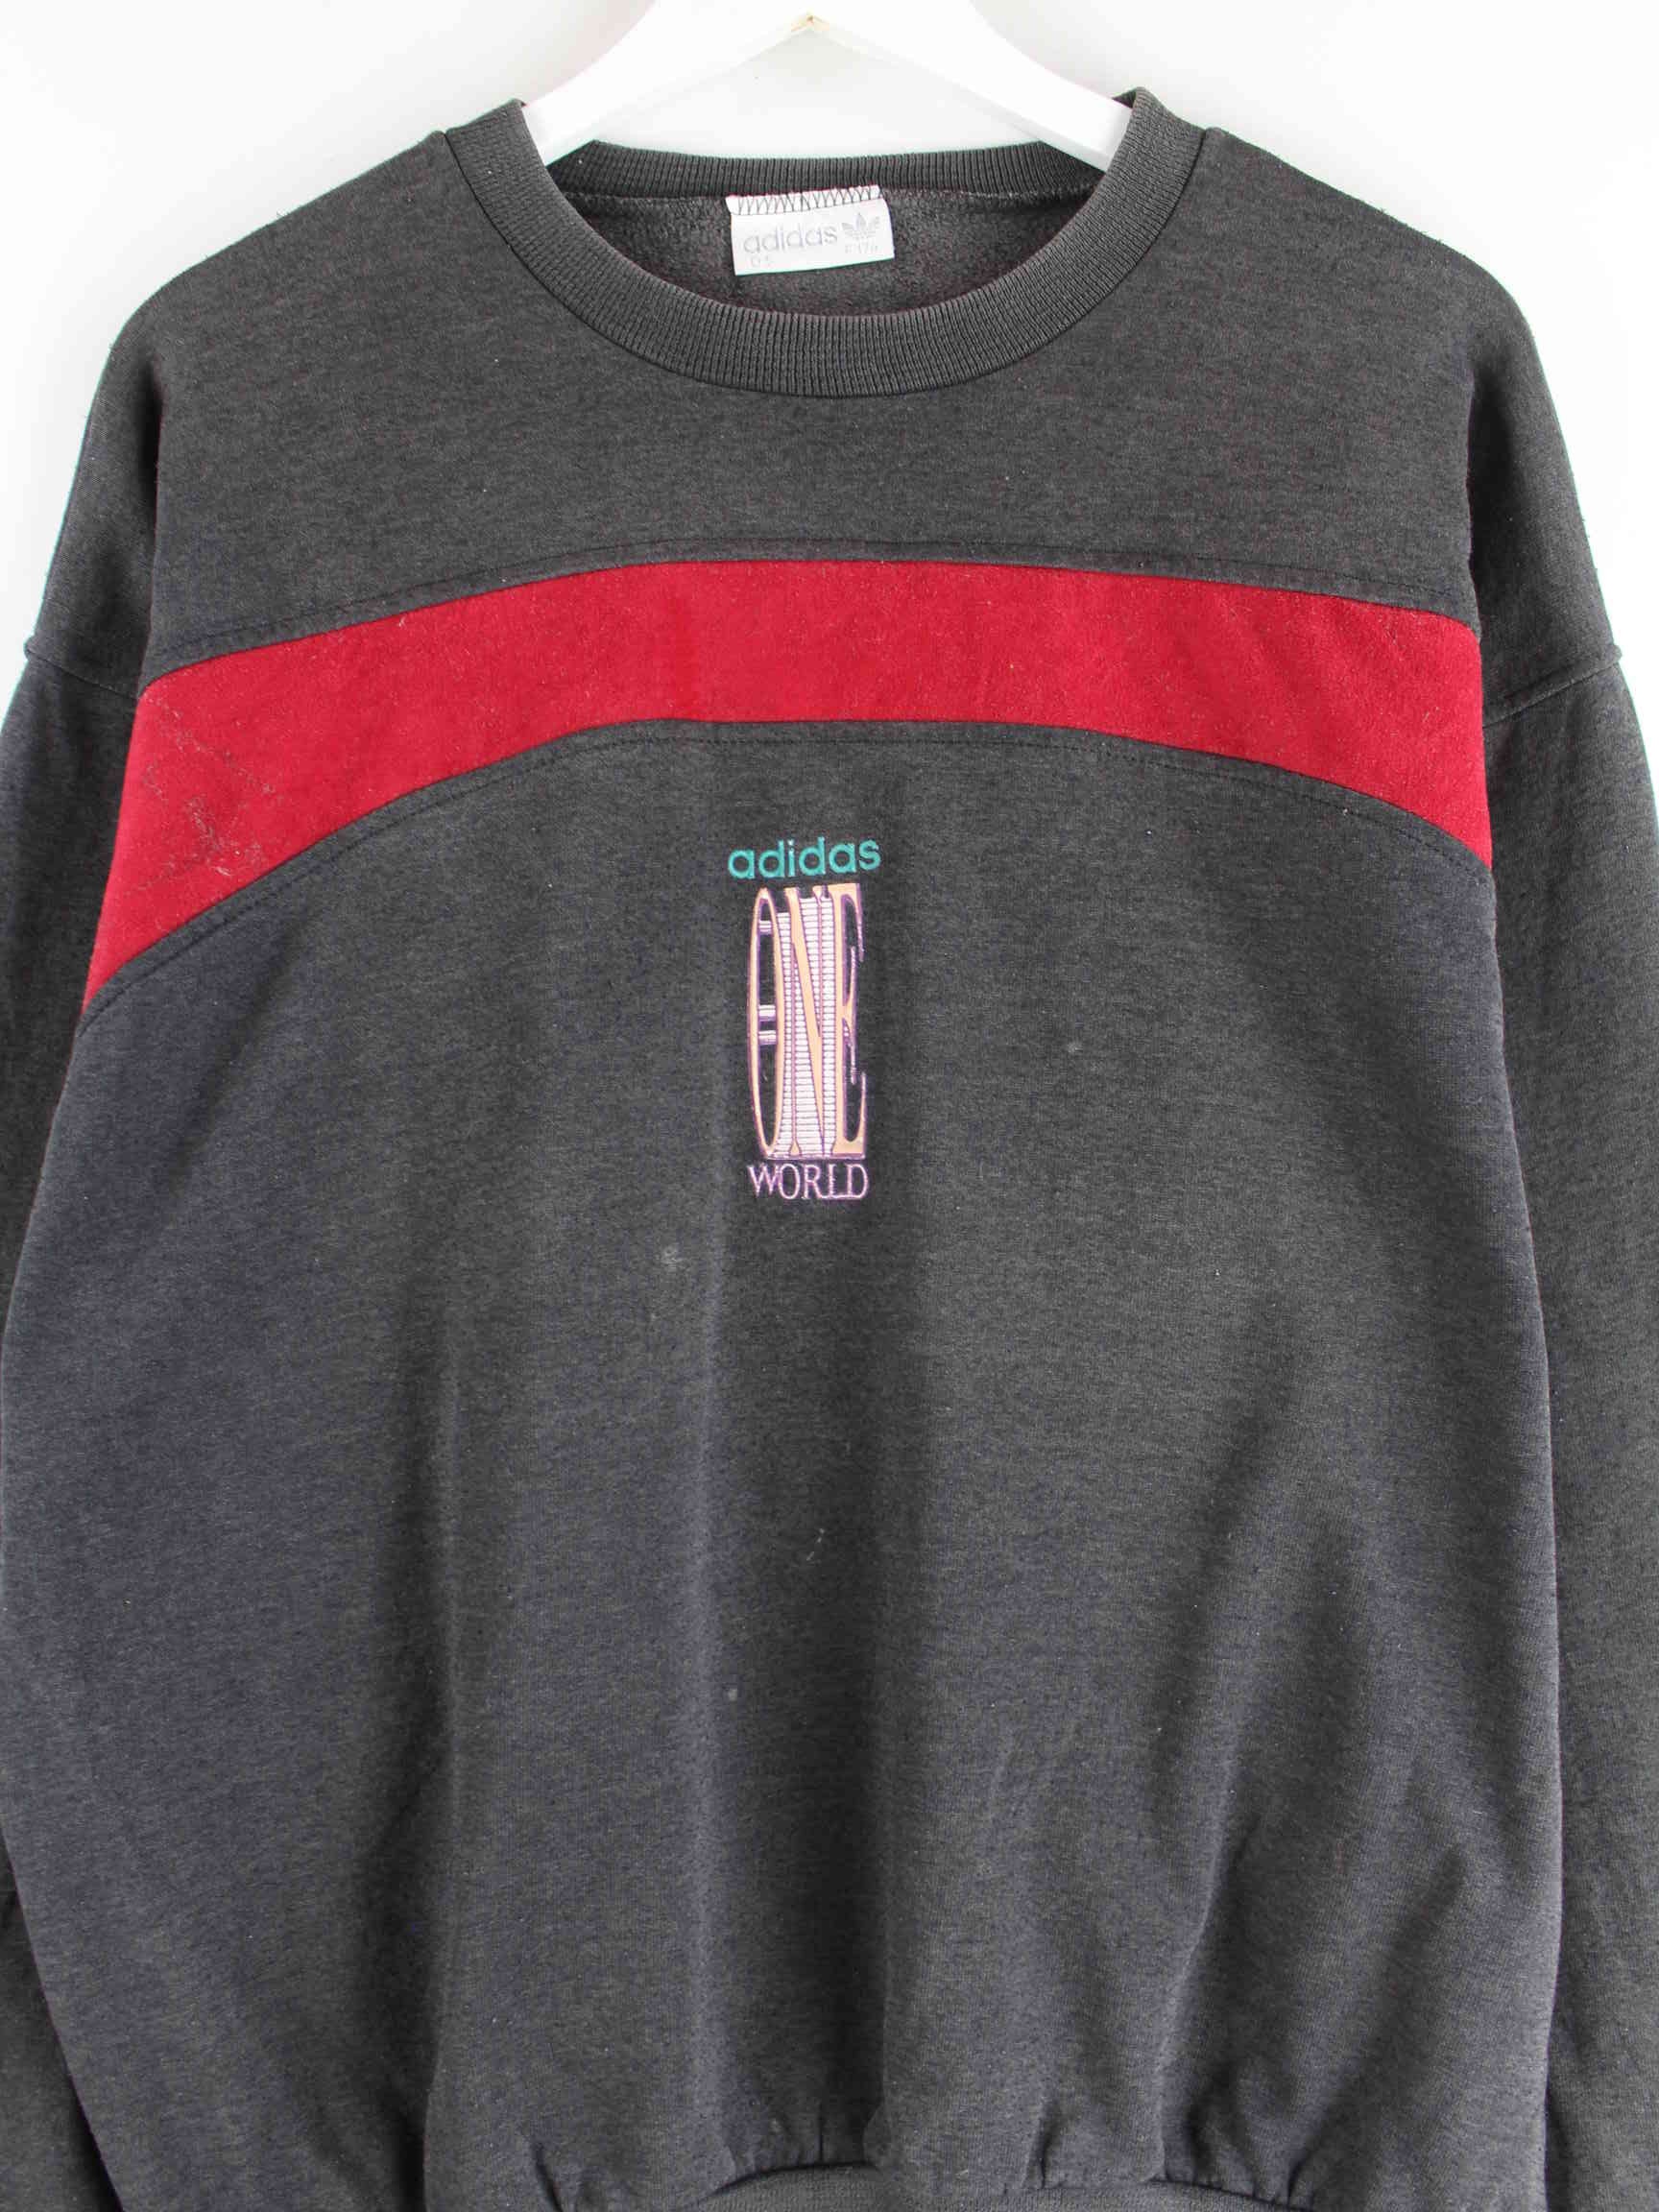 Adidas 80s Vintage One World Sweater Grau M (detail image 1)